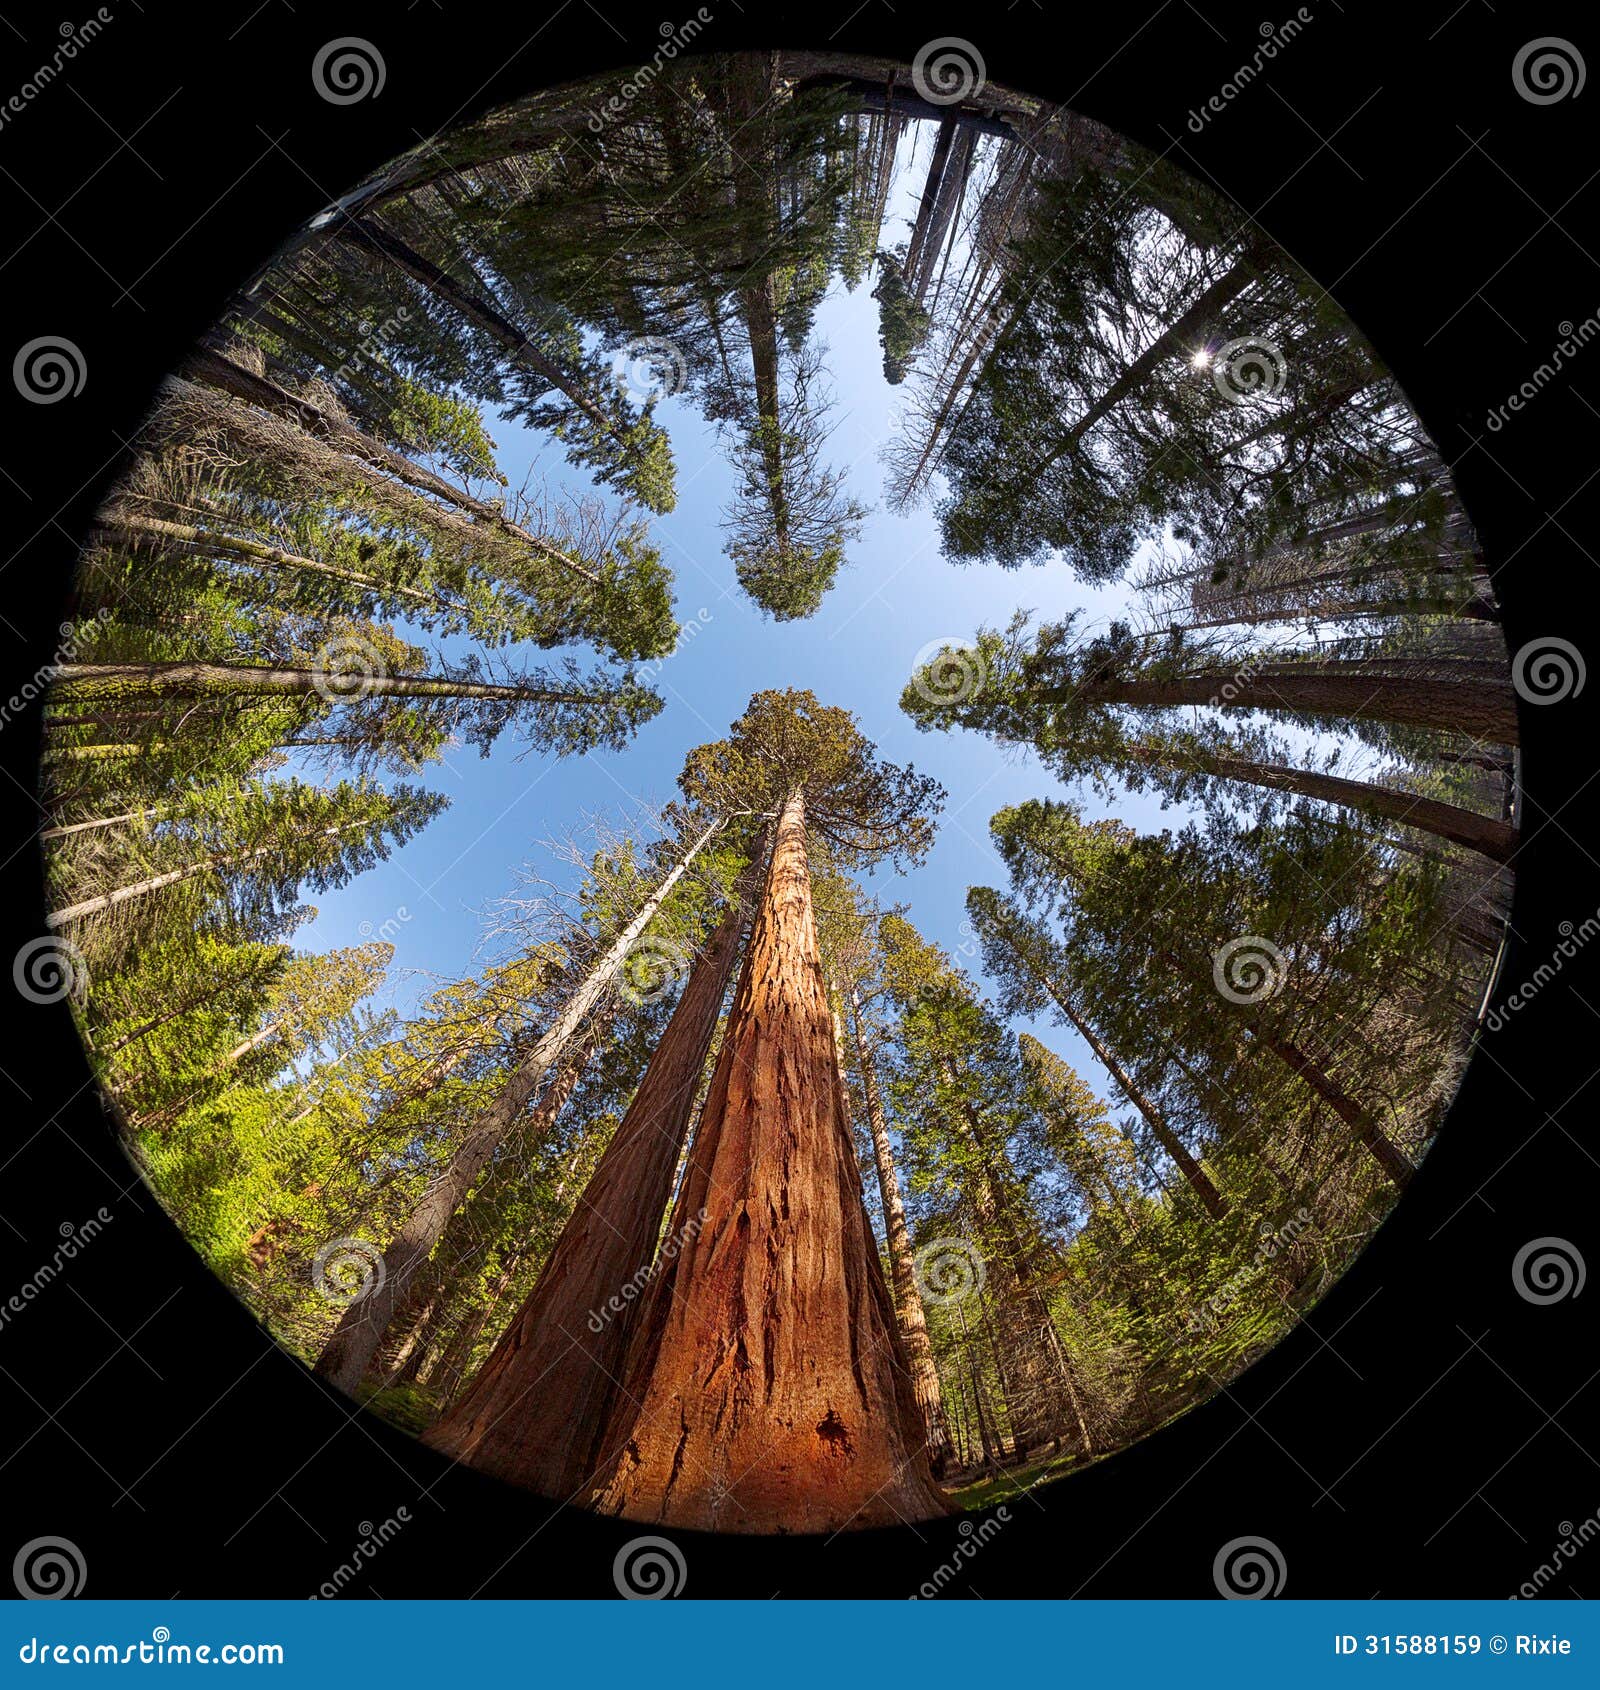 giant sequoia fisheye view trees mariposa grove yosemite national park california usa 31588159